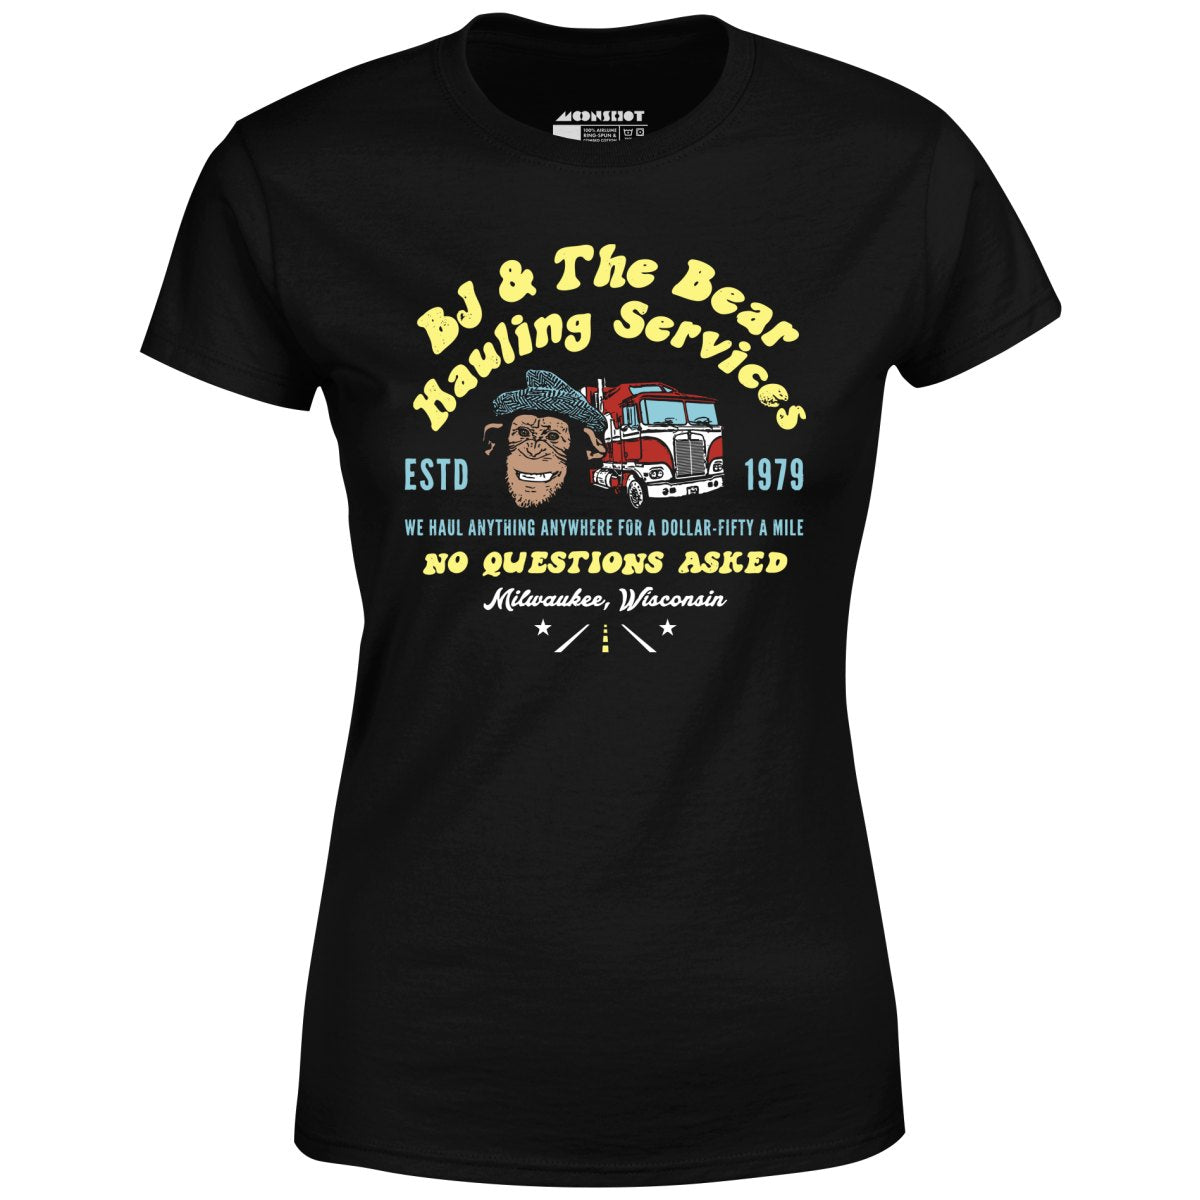 BJ & The Bear Hauling Services - Women's T-Shirt